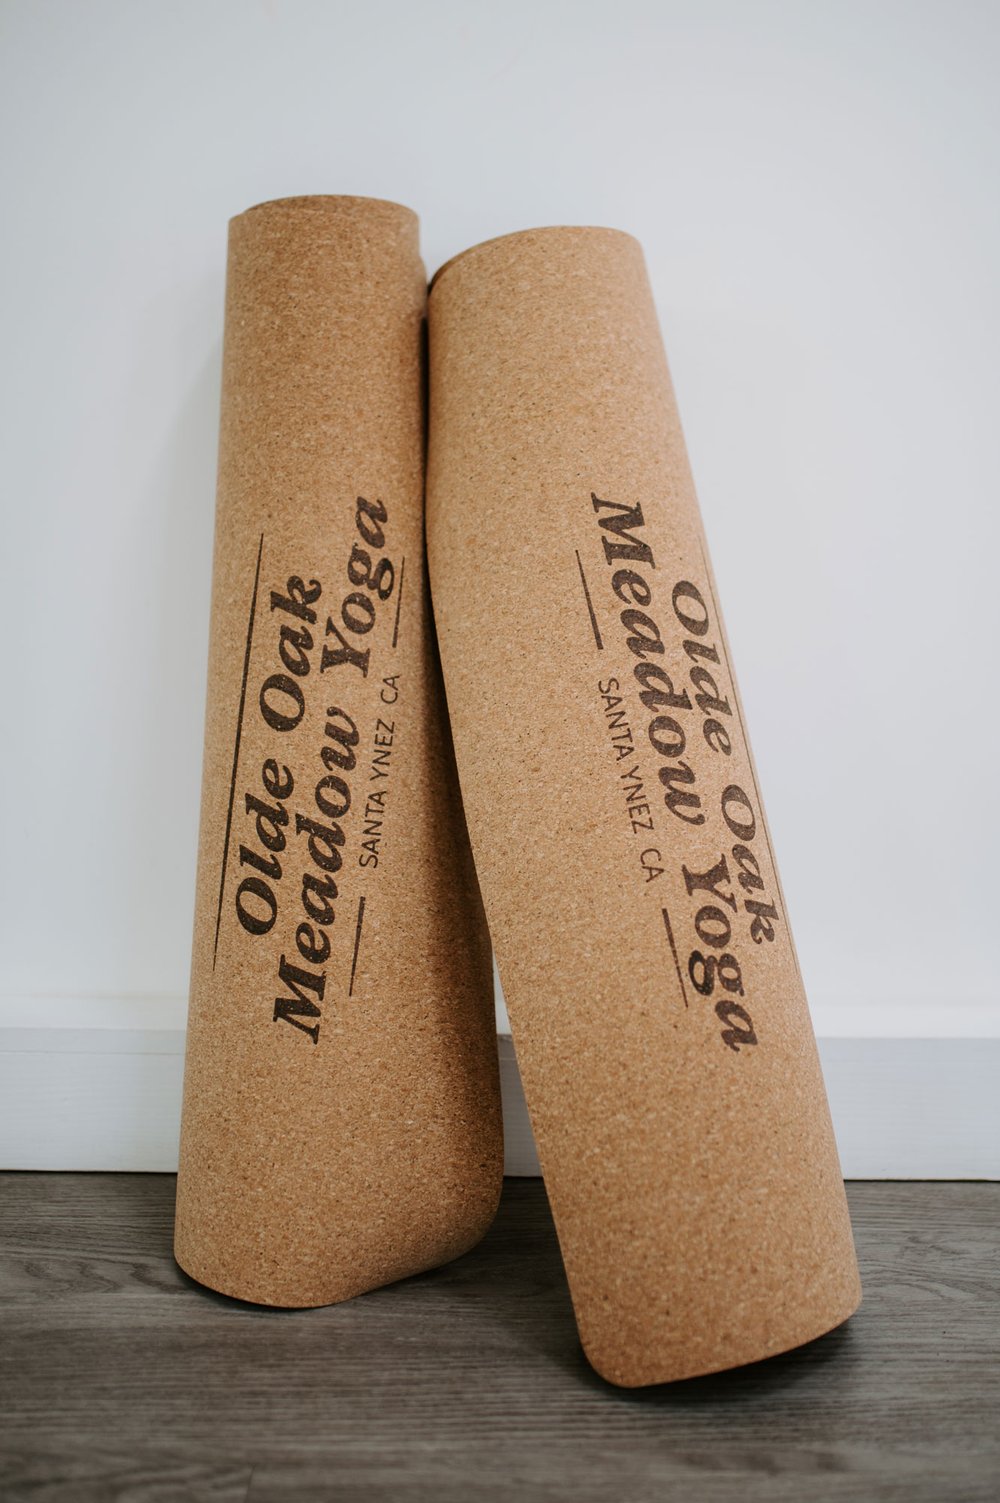 High Quality Cork Yoga Mat - Olde Oak Meadow Yoga Santa Ynez